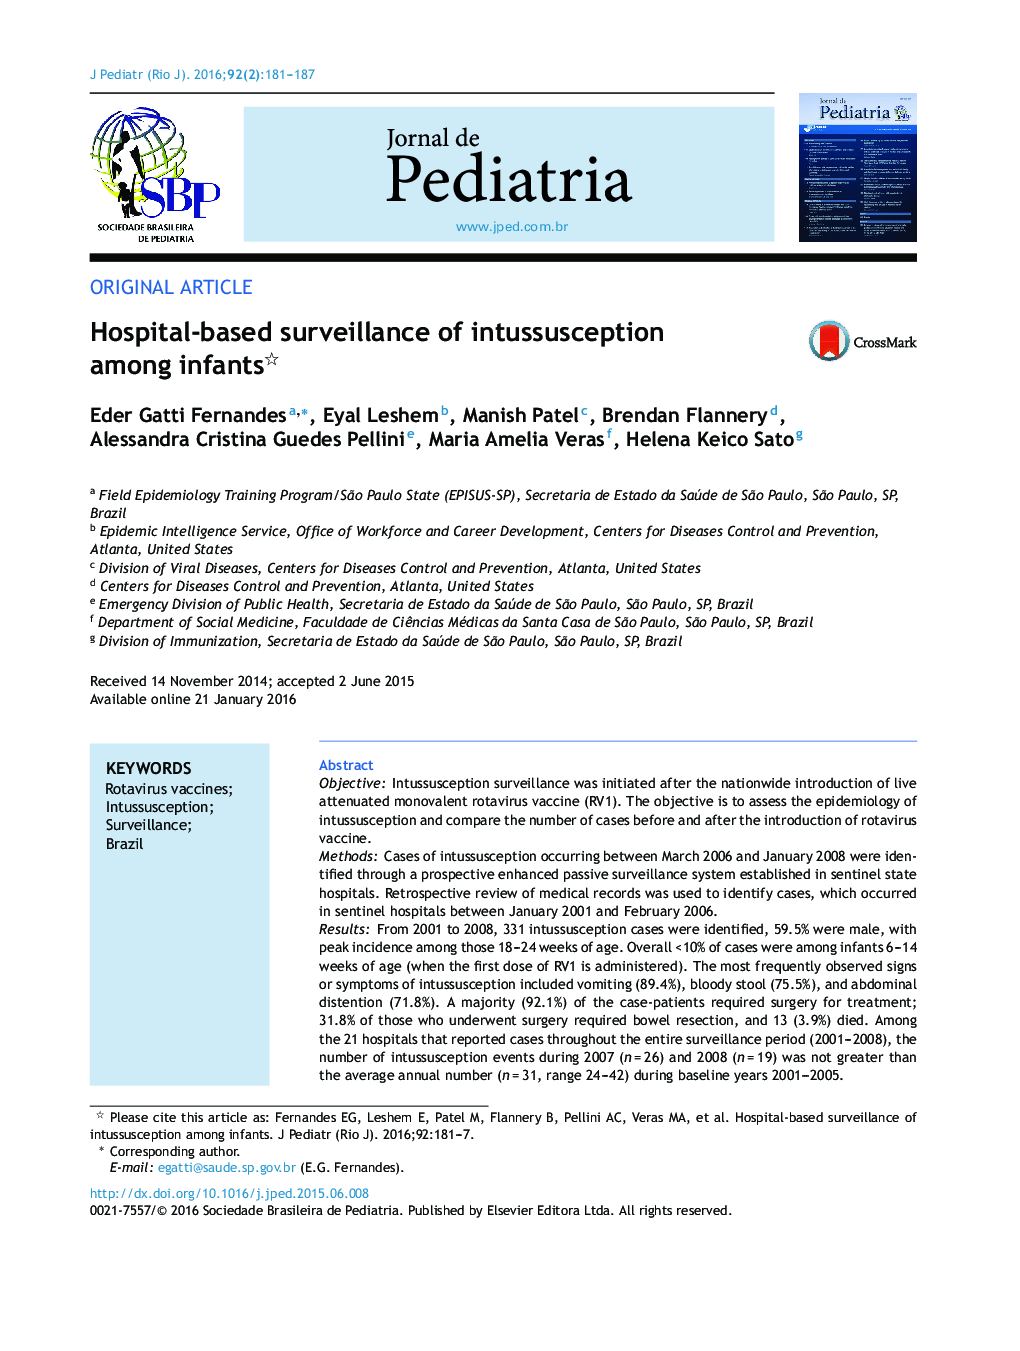 Hospital-based surveillance of intussusception among infants 